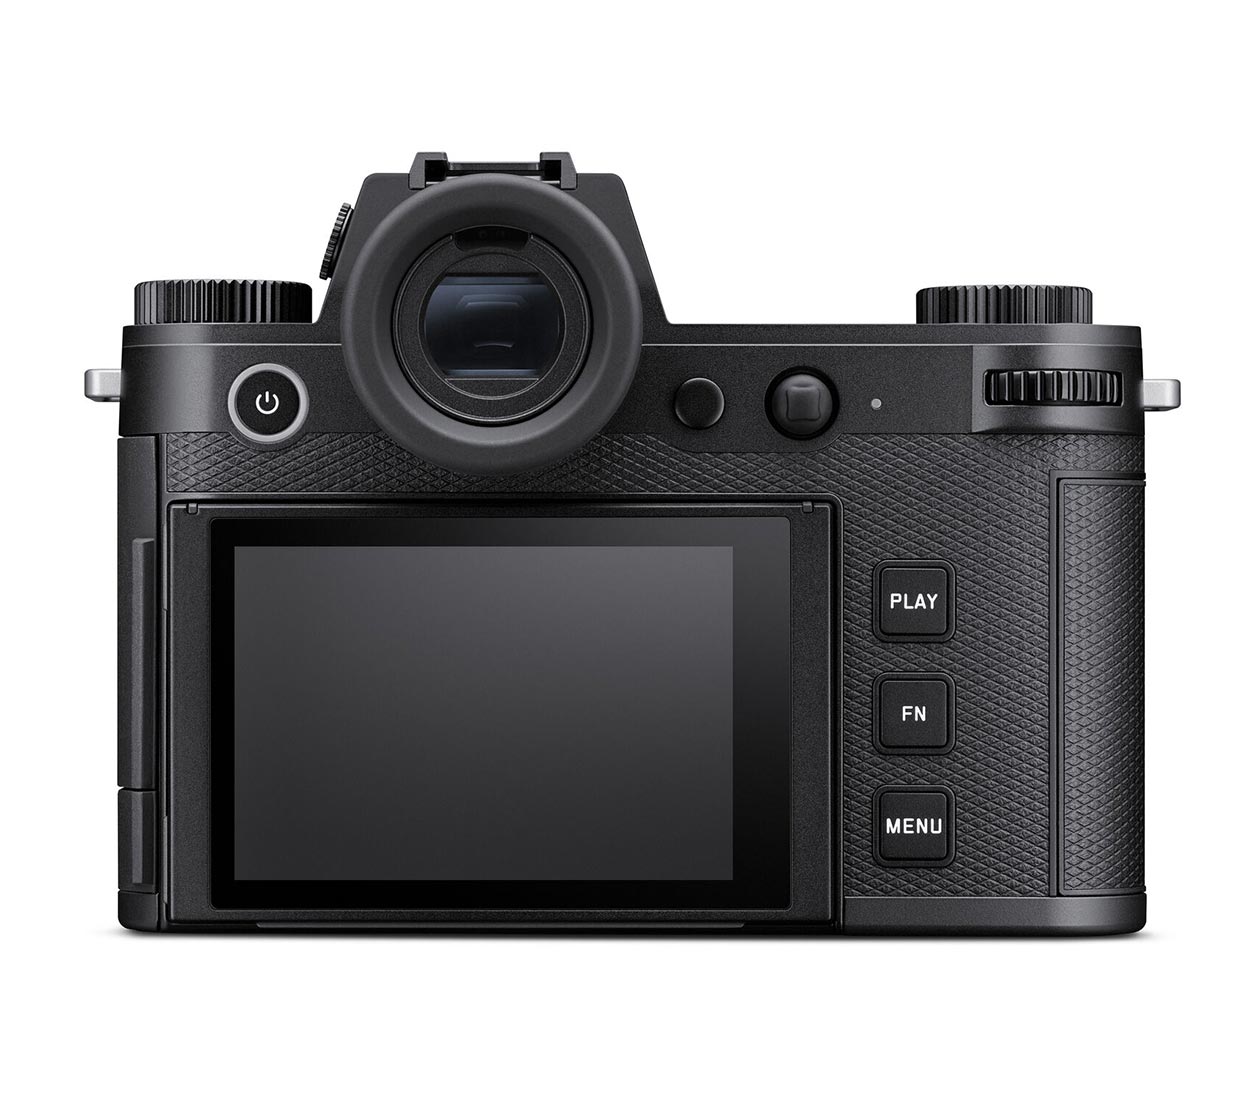 Leica SL3 Mirrorless Camera